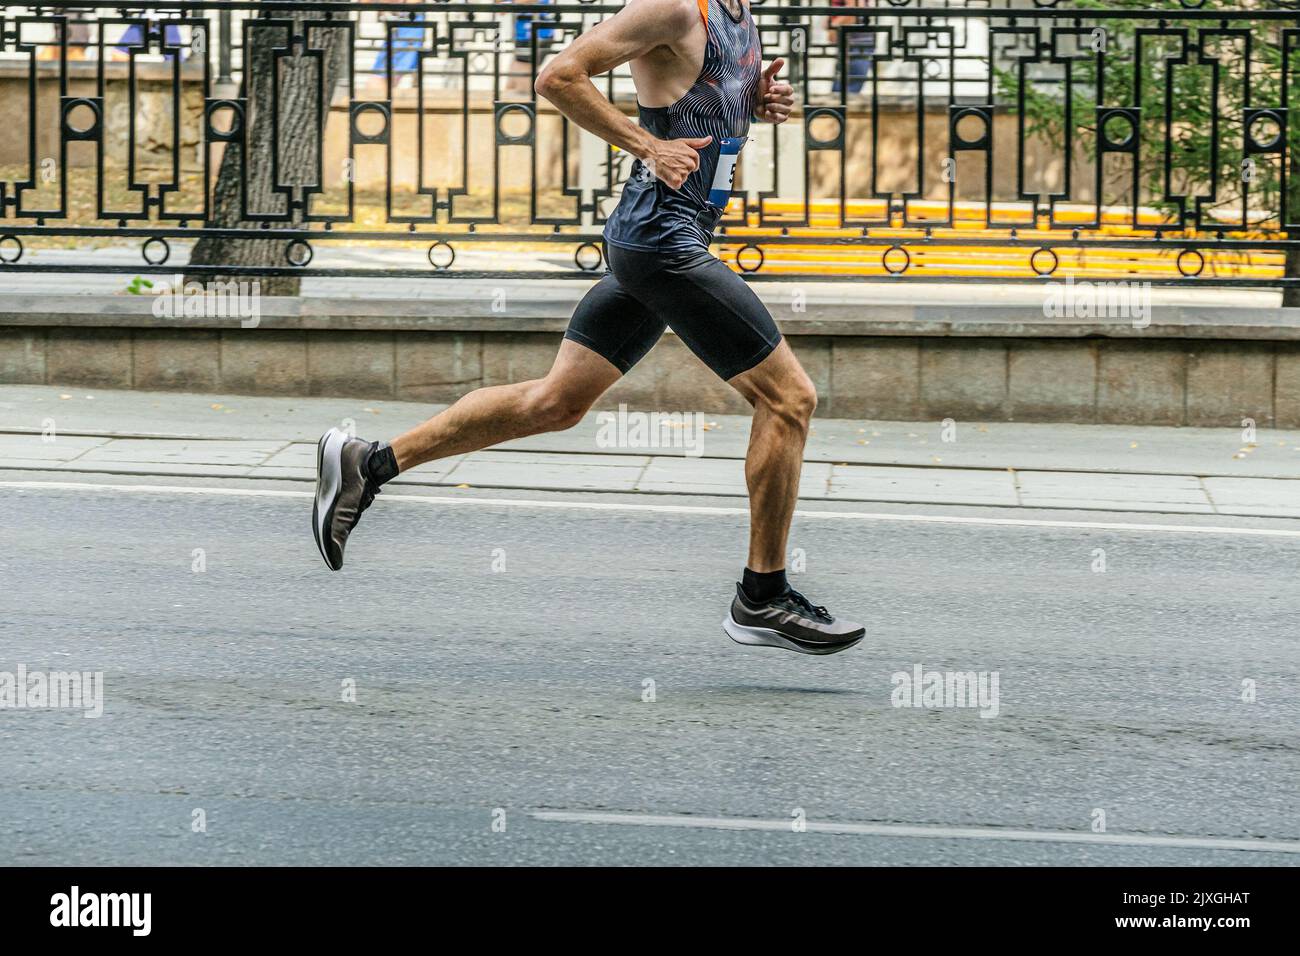 athletic male runner running marathon race Stock Photo